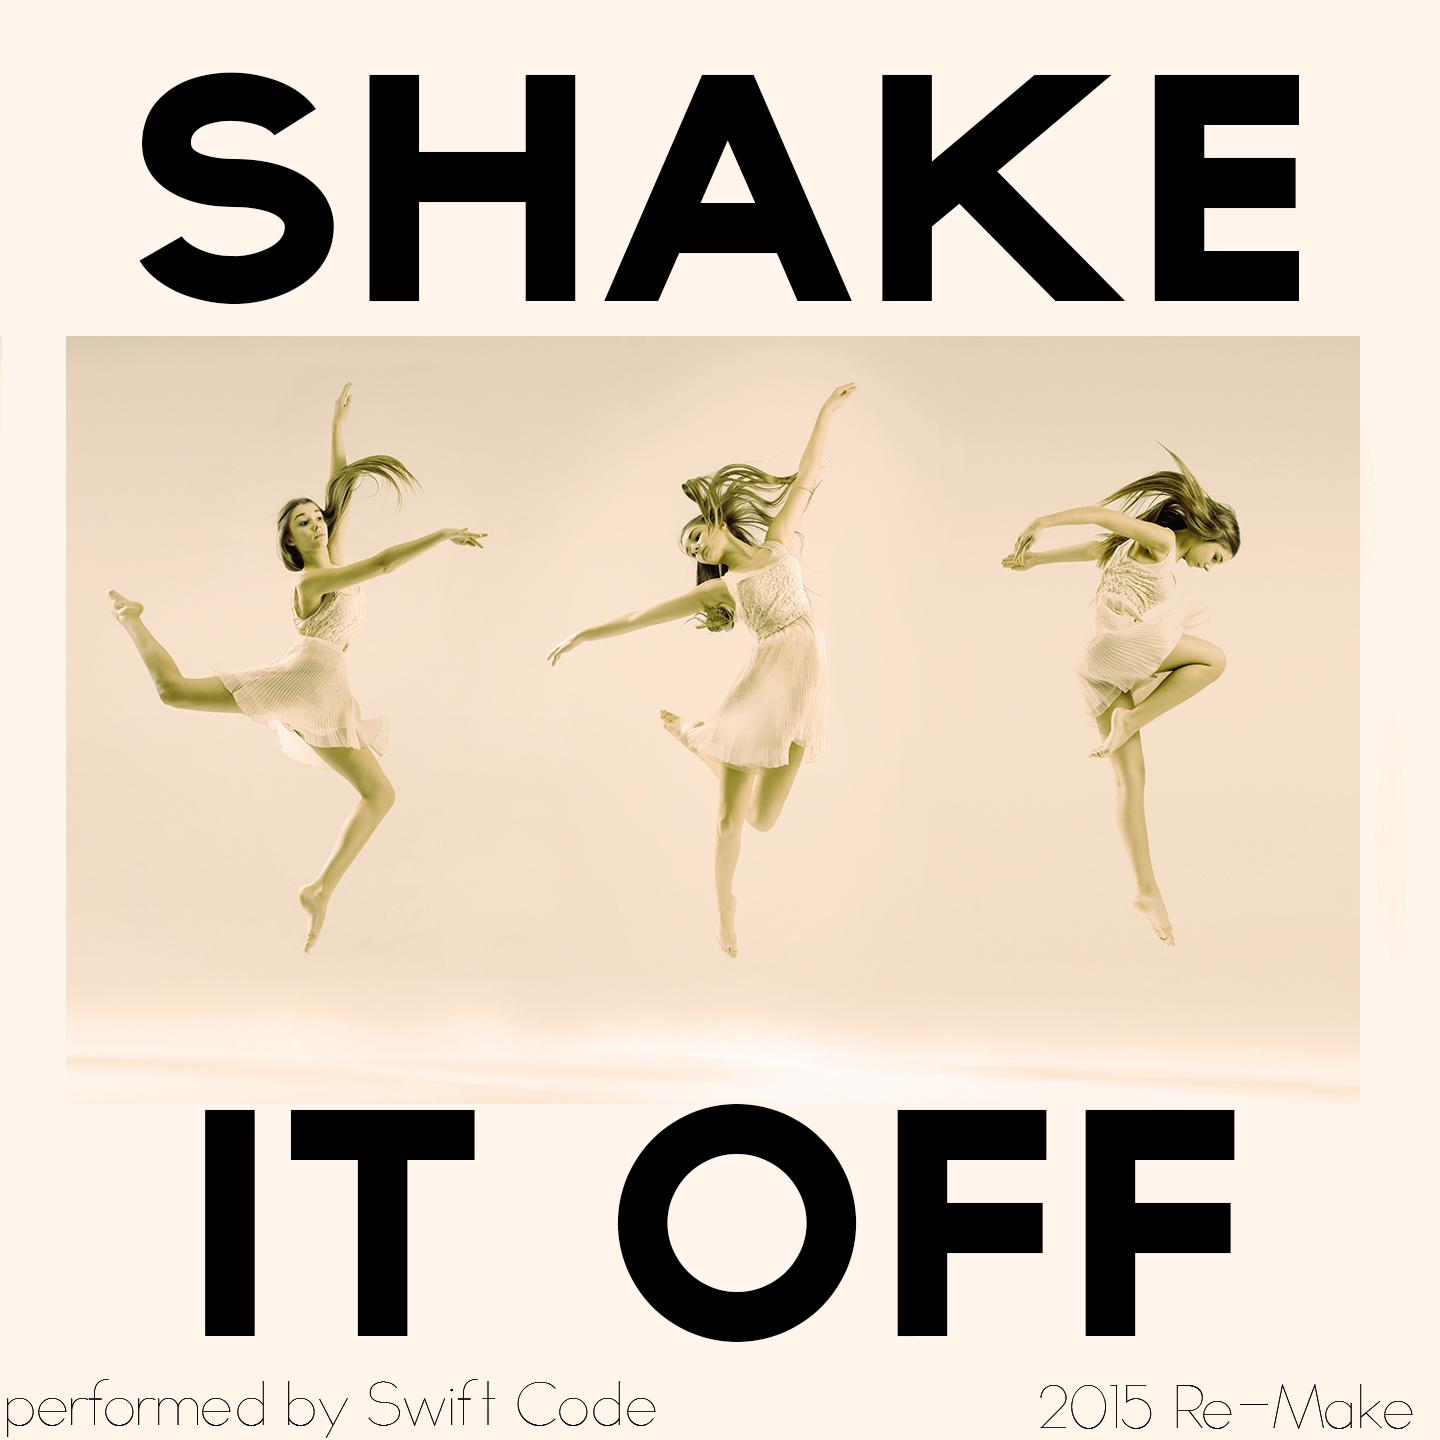 Off songs. Shake it off. Песня Shake it off. Песня Шейк ИТ офф. Taylor Swift Shake it off 2014.